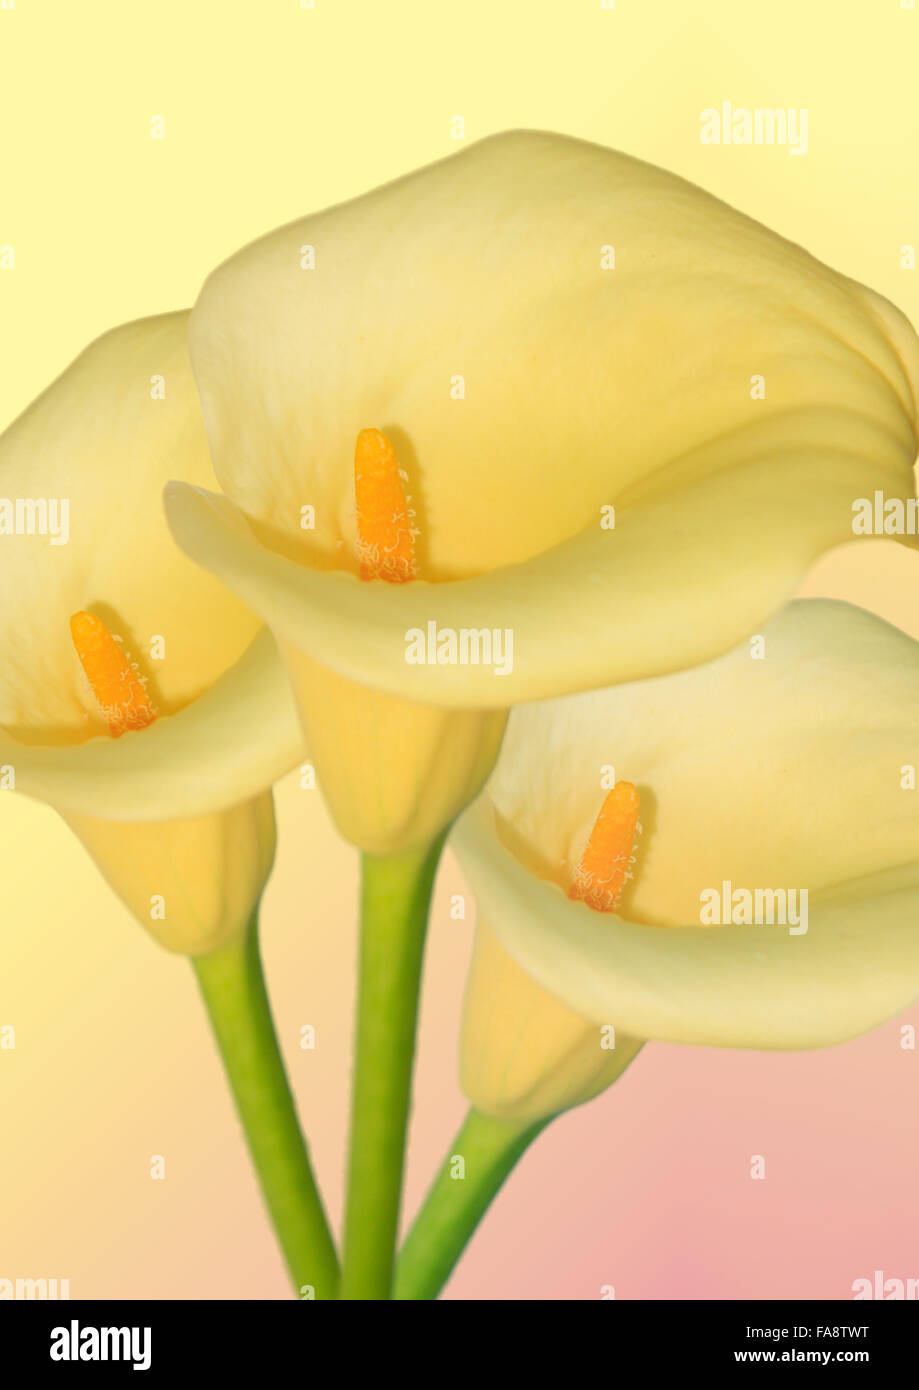 three arum lilies on yellow background Stock Photo